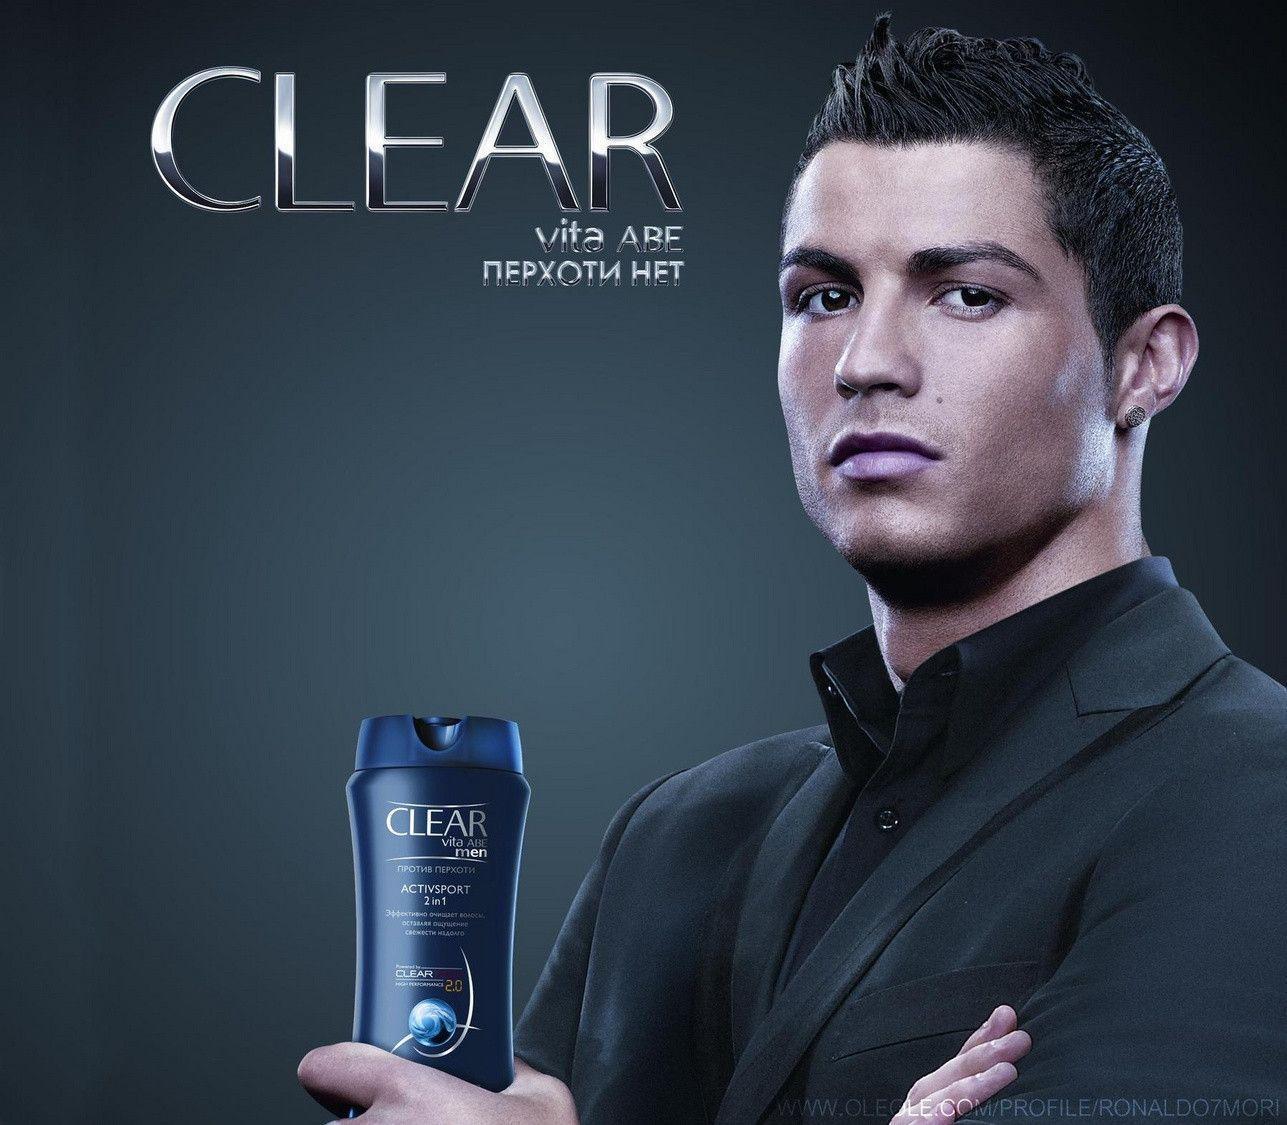 New CR7 Cristiano Ronaldo hair treatment high res desktop